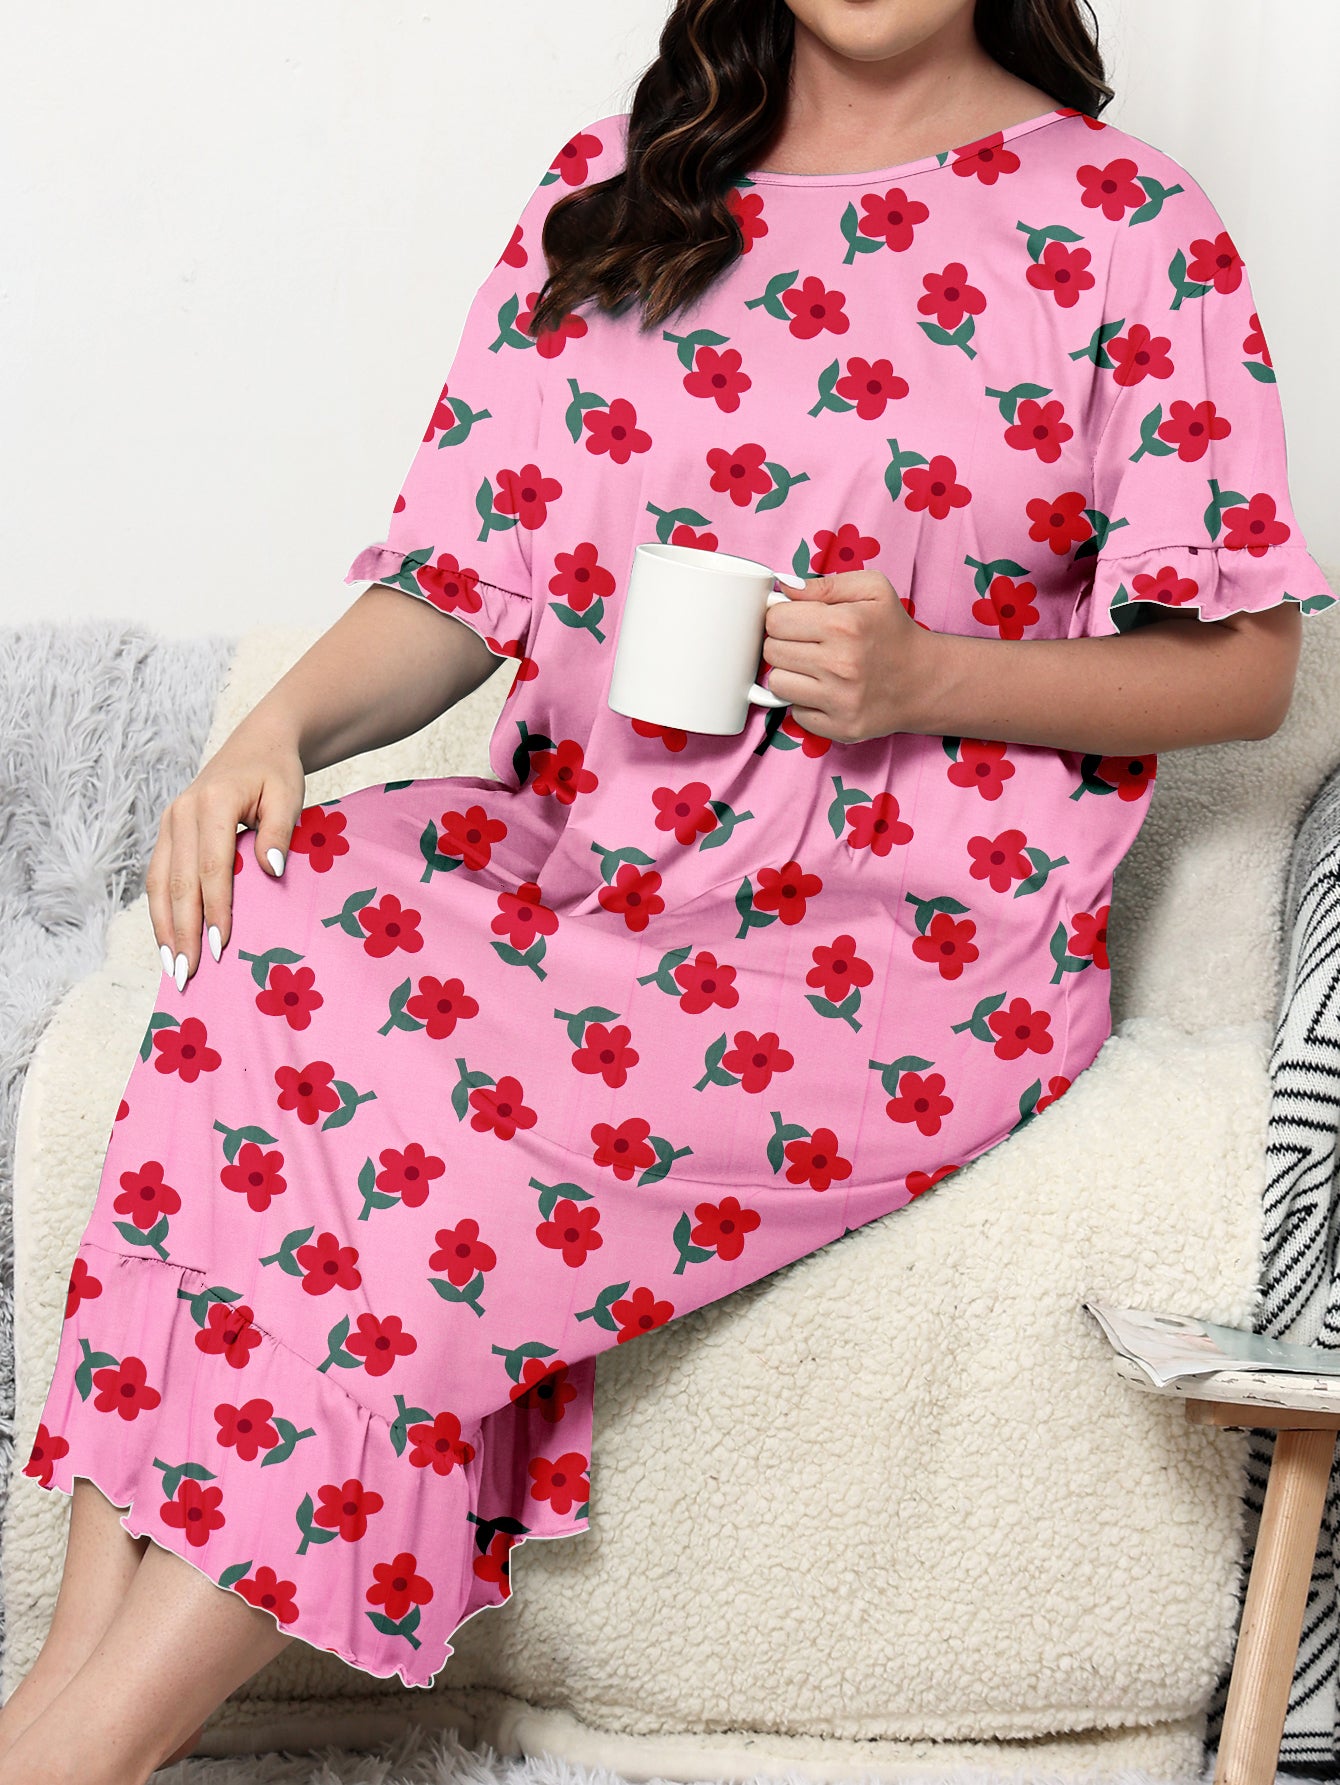 Women's Plus Size Floral Print Short Sleeve Crew Neck Sleep Dress with Ruffle Trim